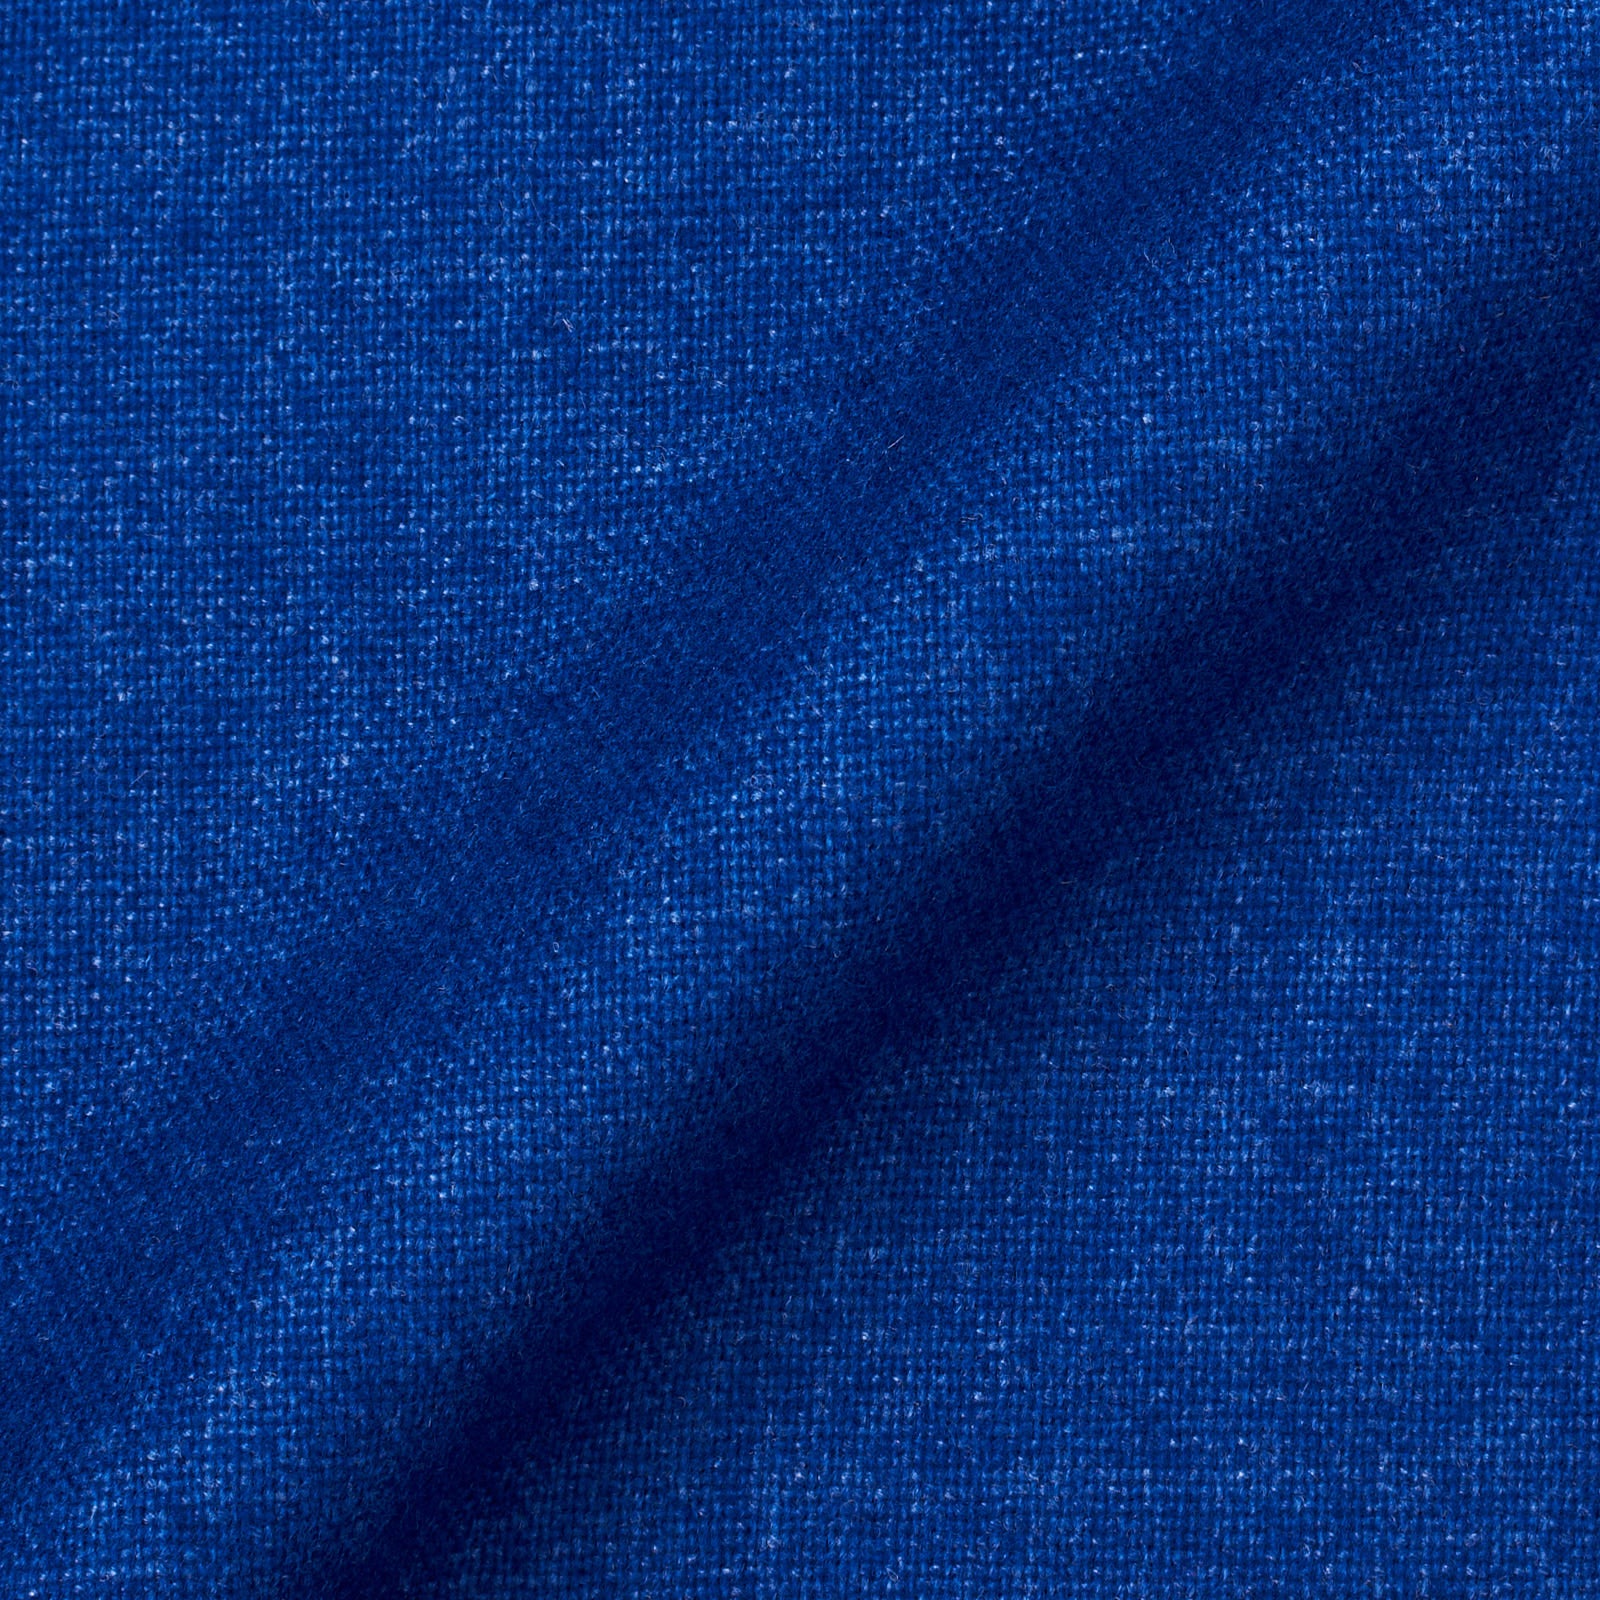 BOGLIOLI Milano "76" Royal Blue Wool Blend Unlined Jacket EU 48 NEW US 38